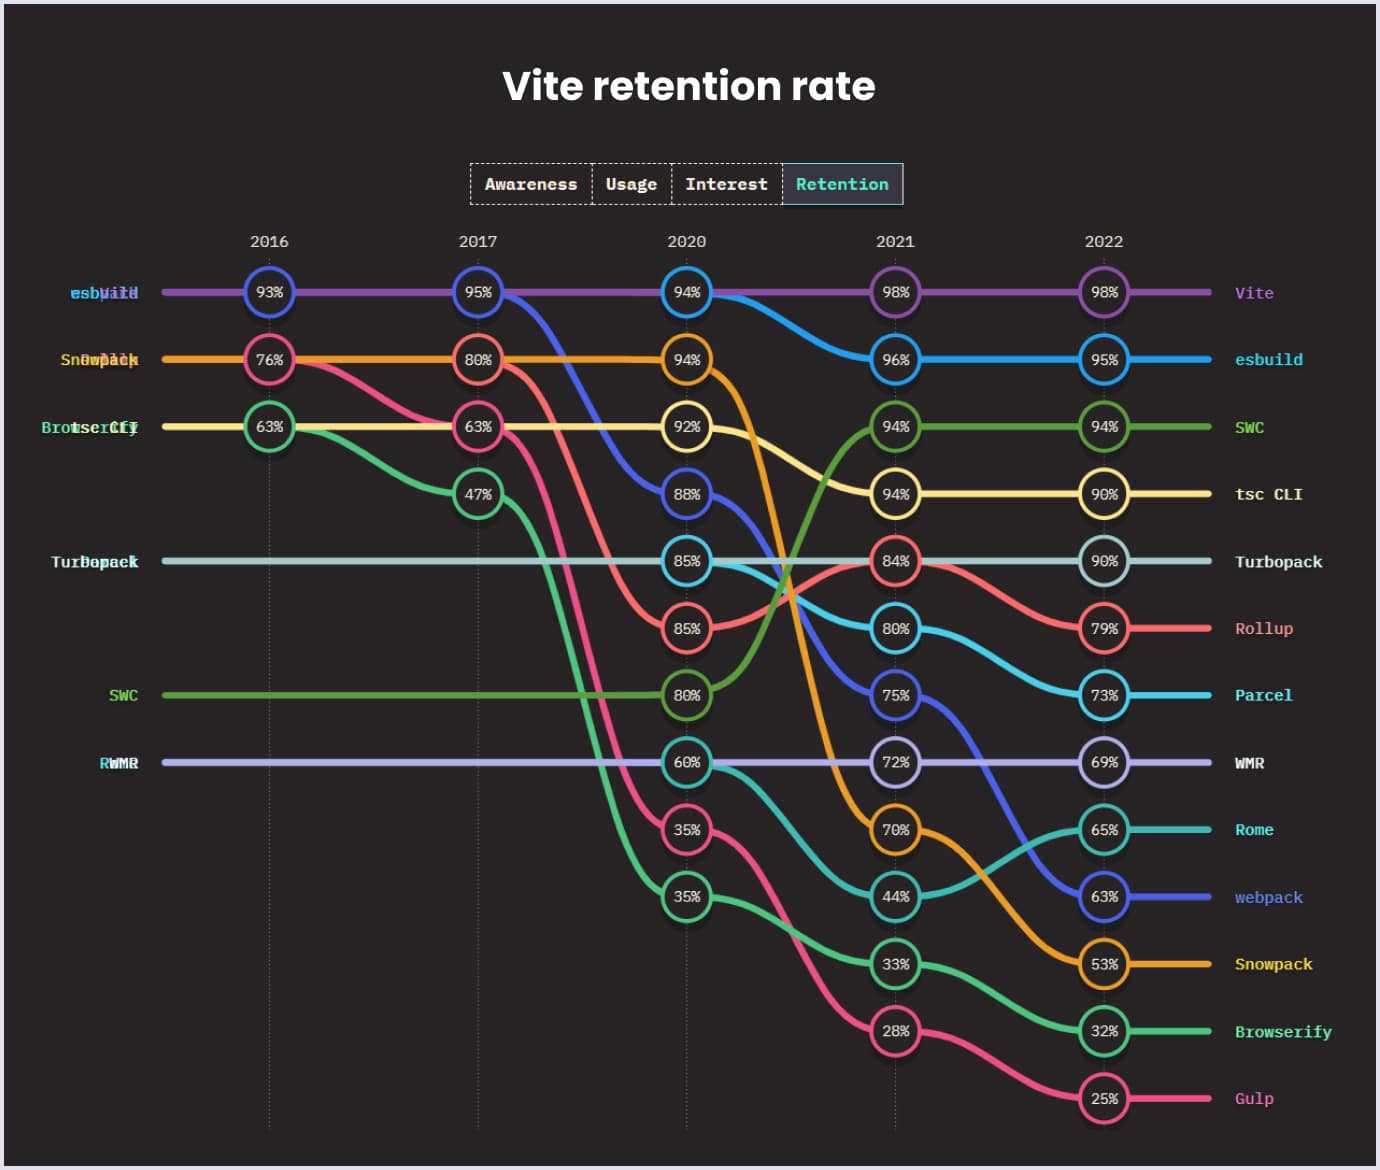 Vite retention rate in 2022